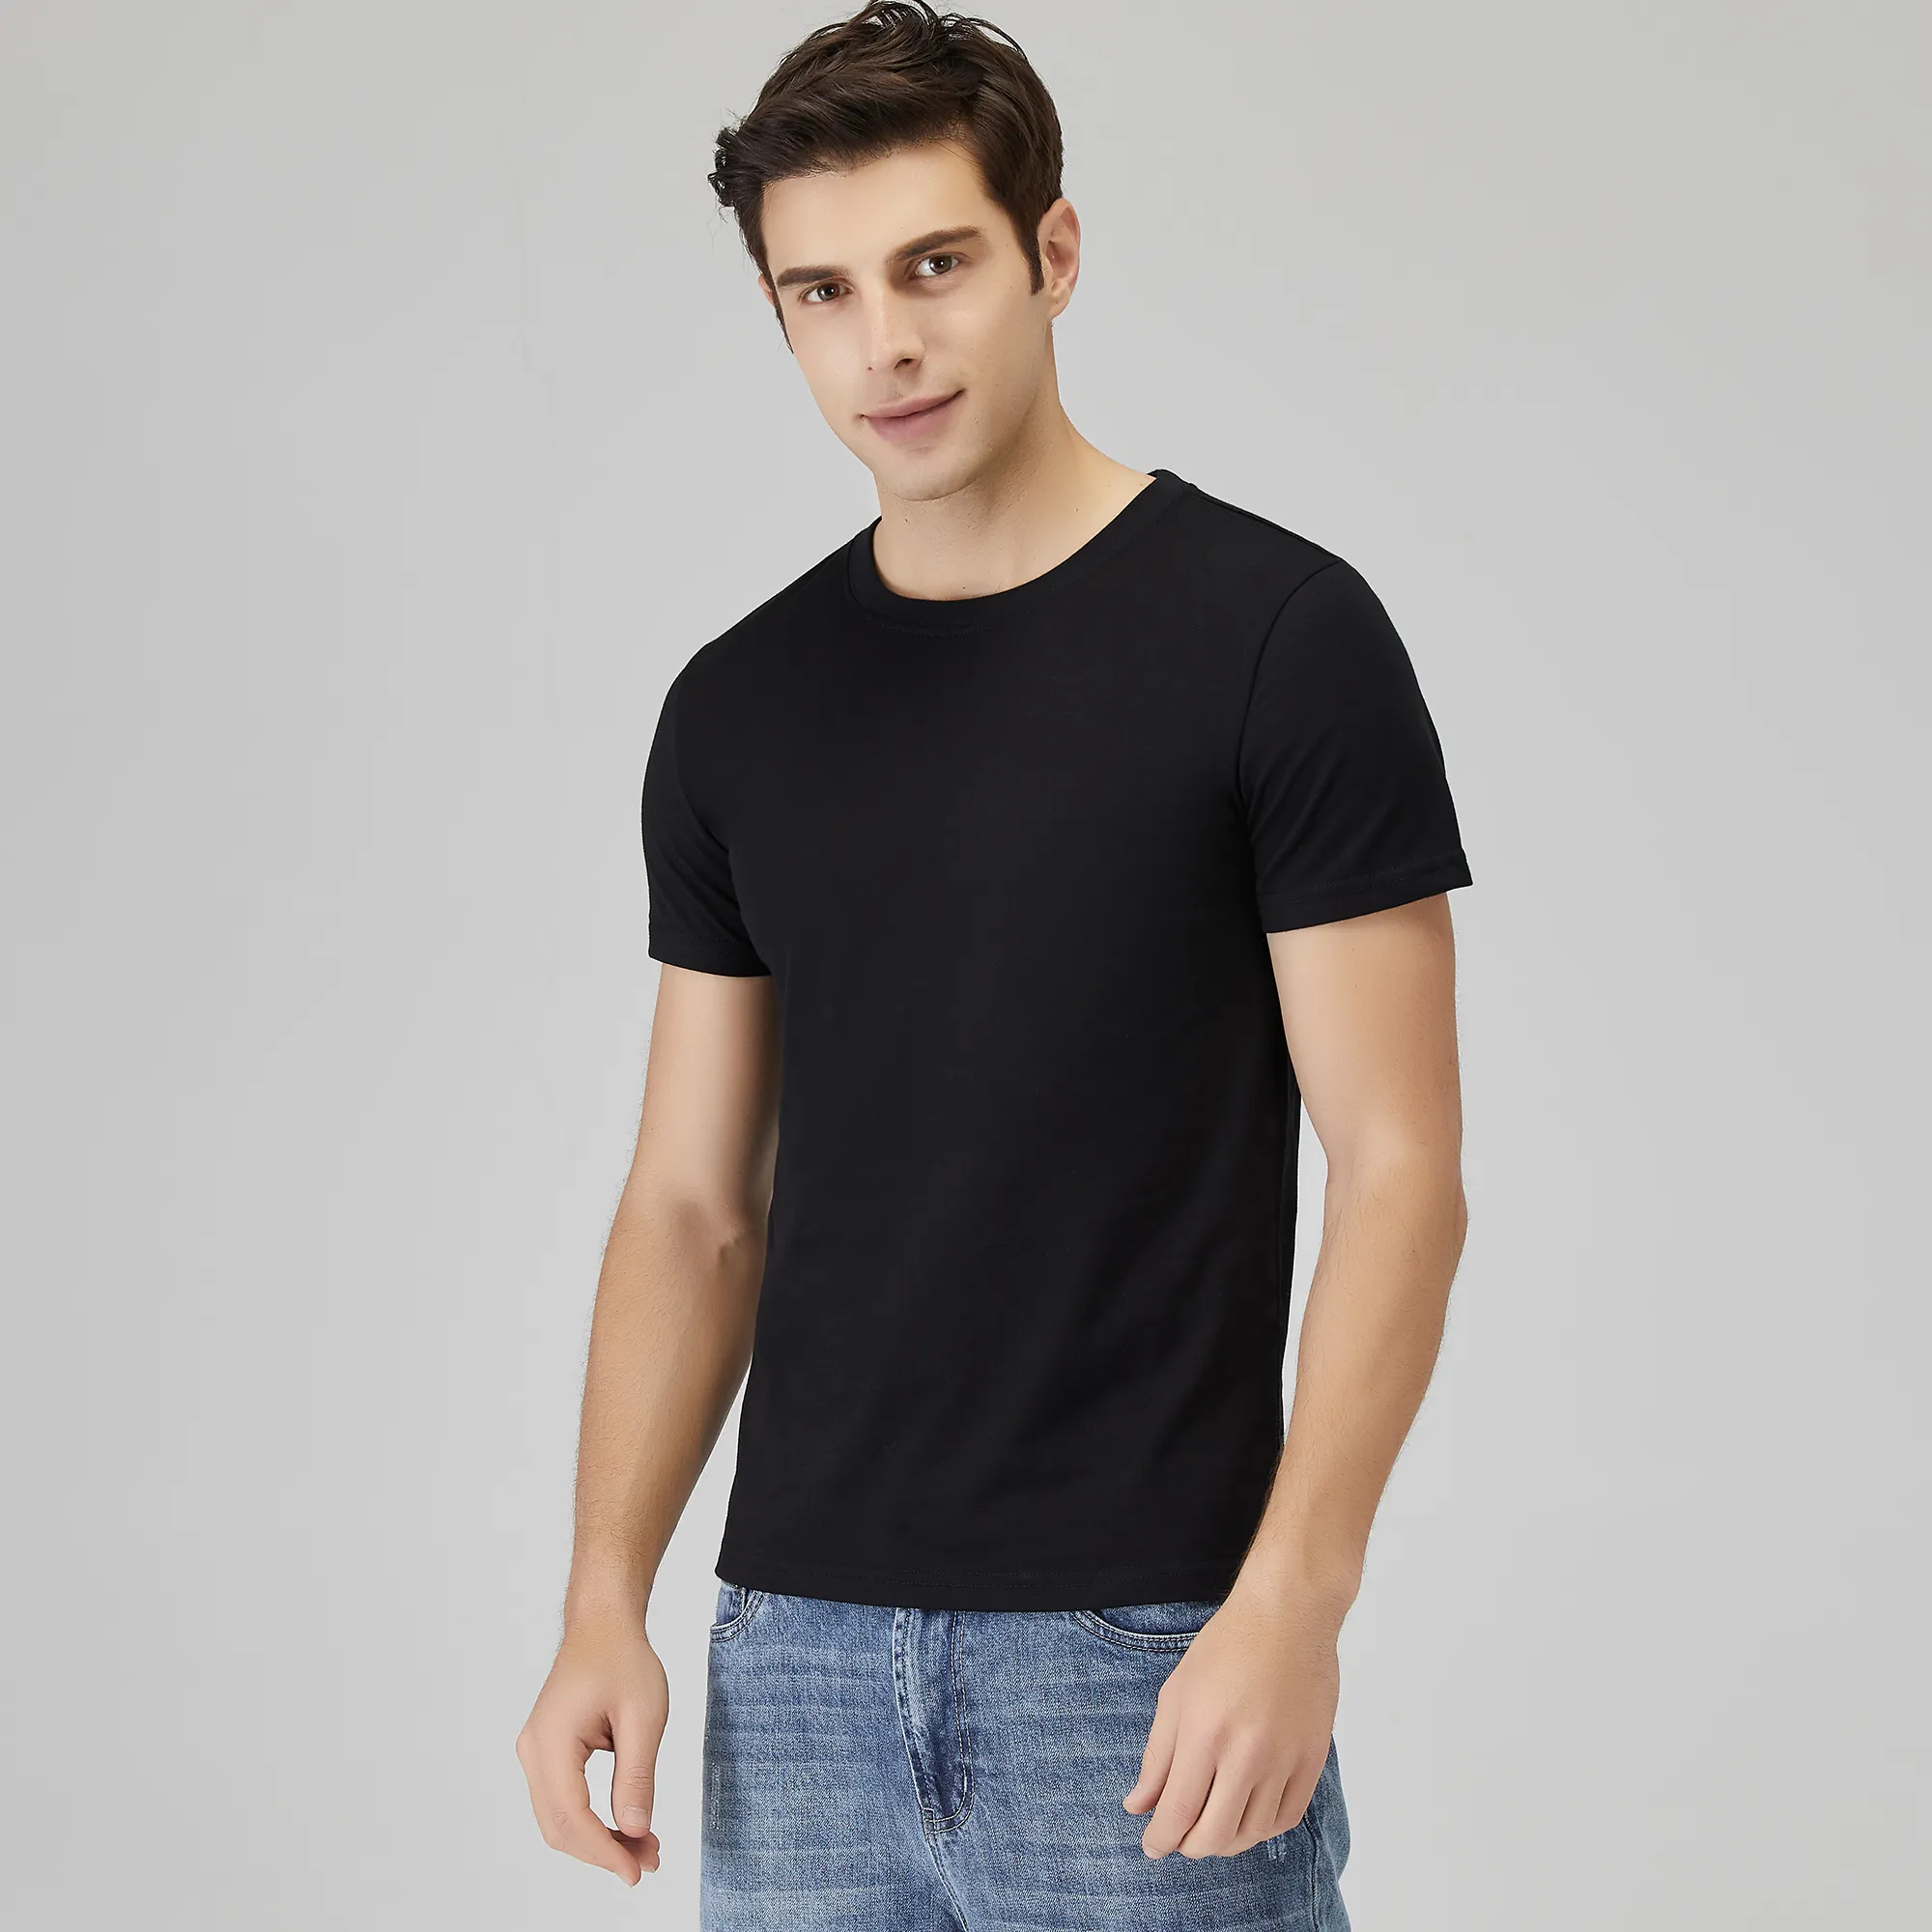 Custom Tshirts Tee T Shirt With 100%cotton Short Sleeves Plain Black T Shirt Cotton